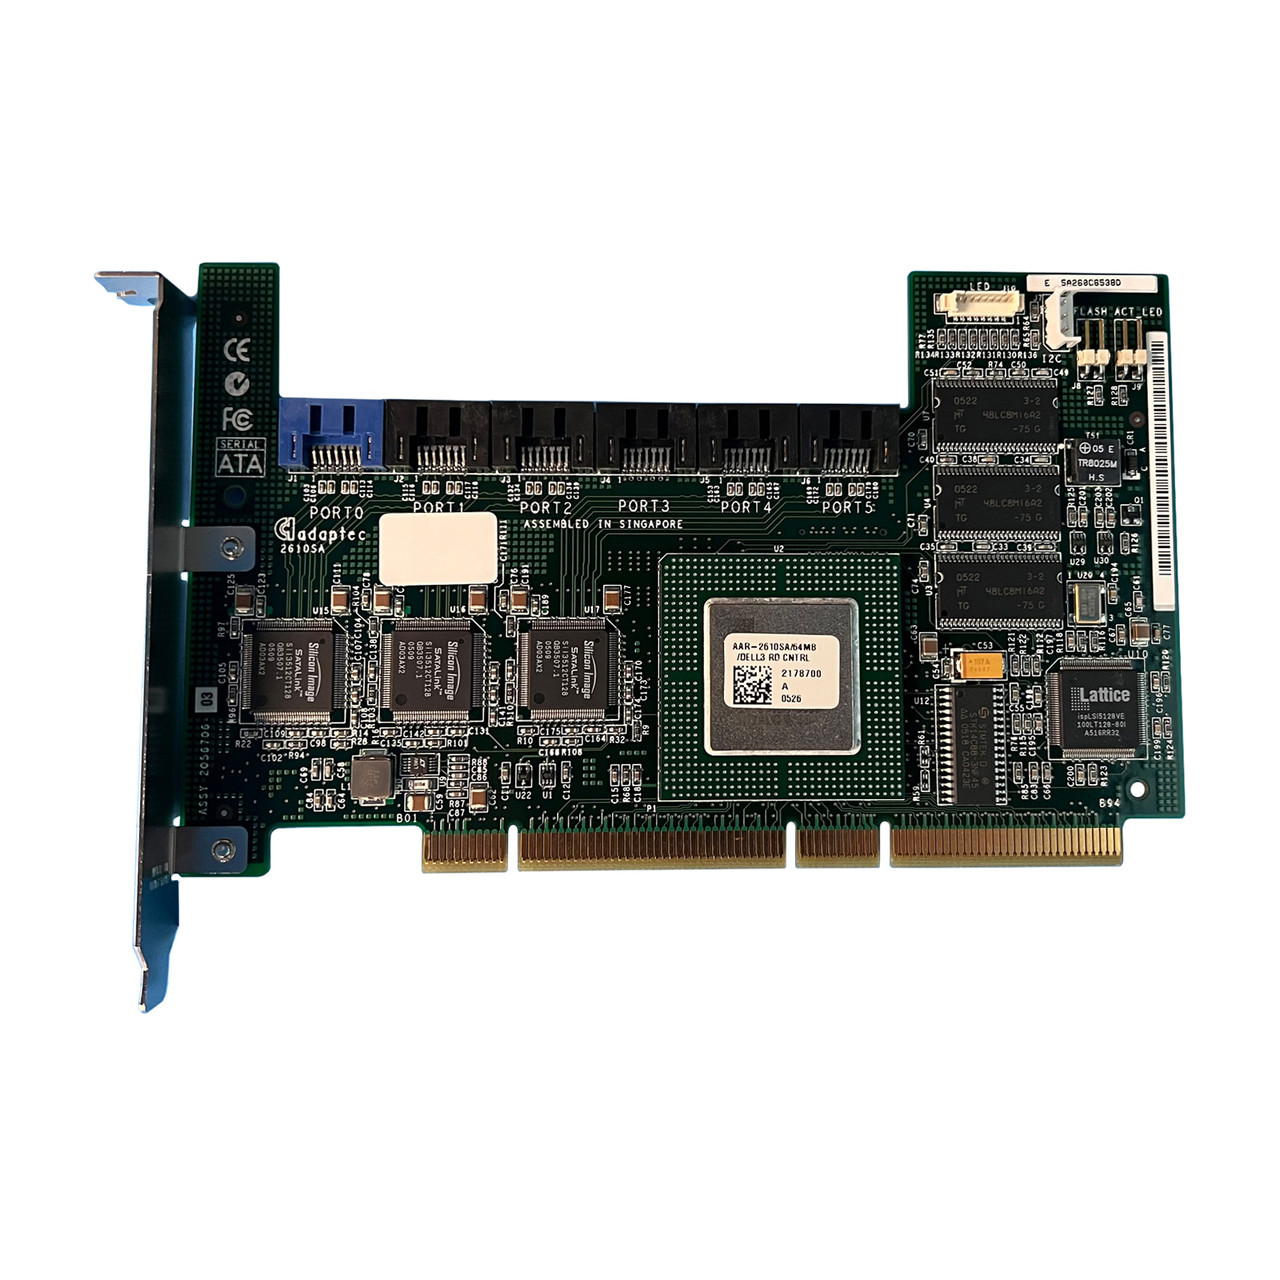 Dell XD084 Cerc 6 PCI-X SATA 6 Channel 1.5GBPS Raid Controller